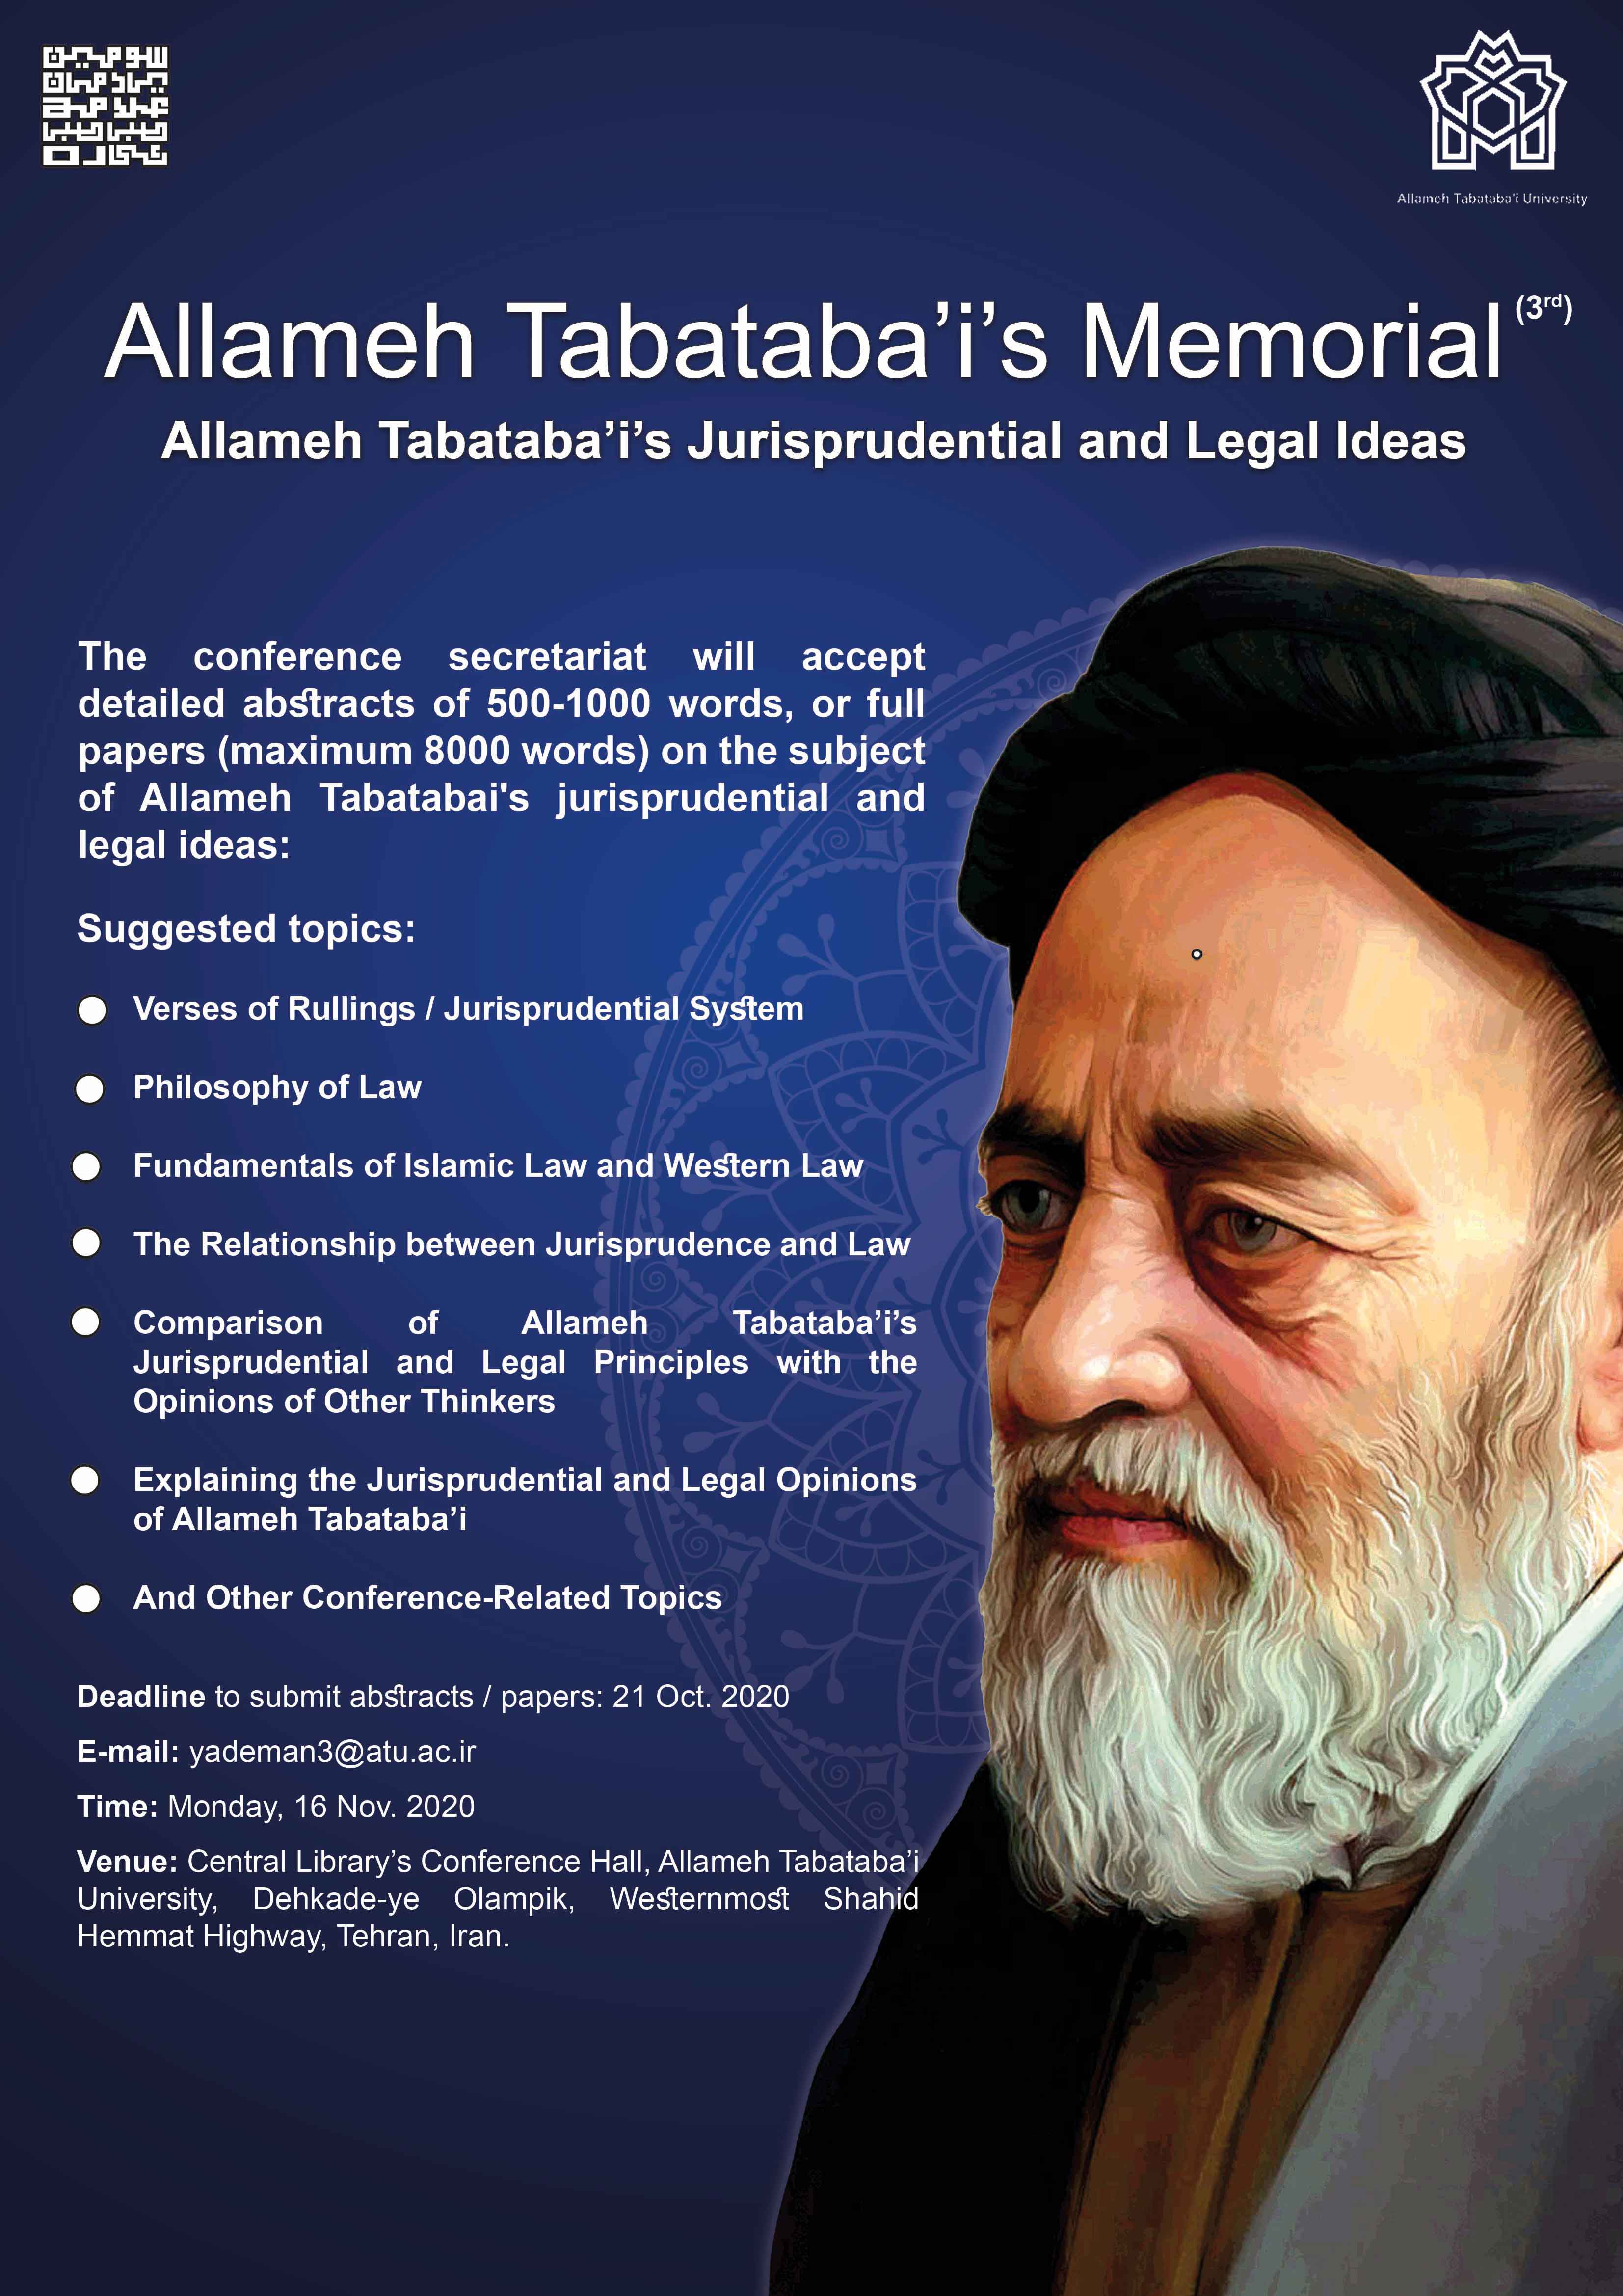 International Conference in Allameh Tabataba